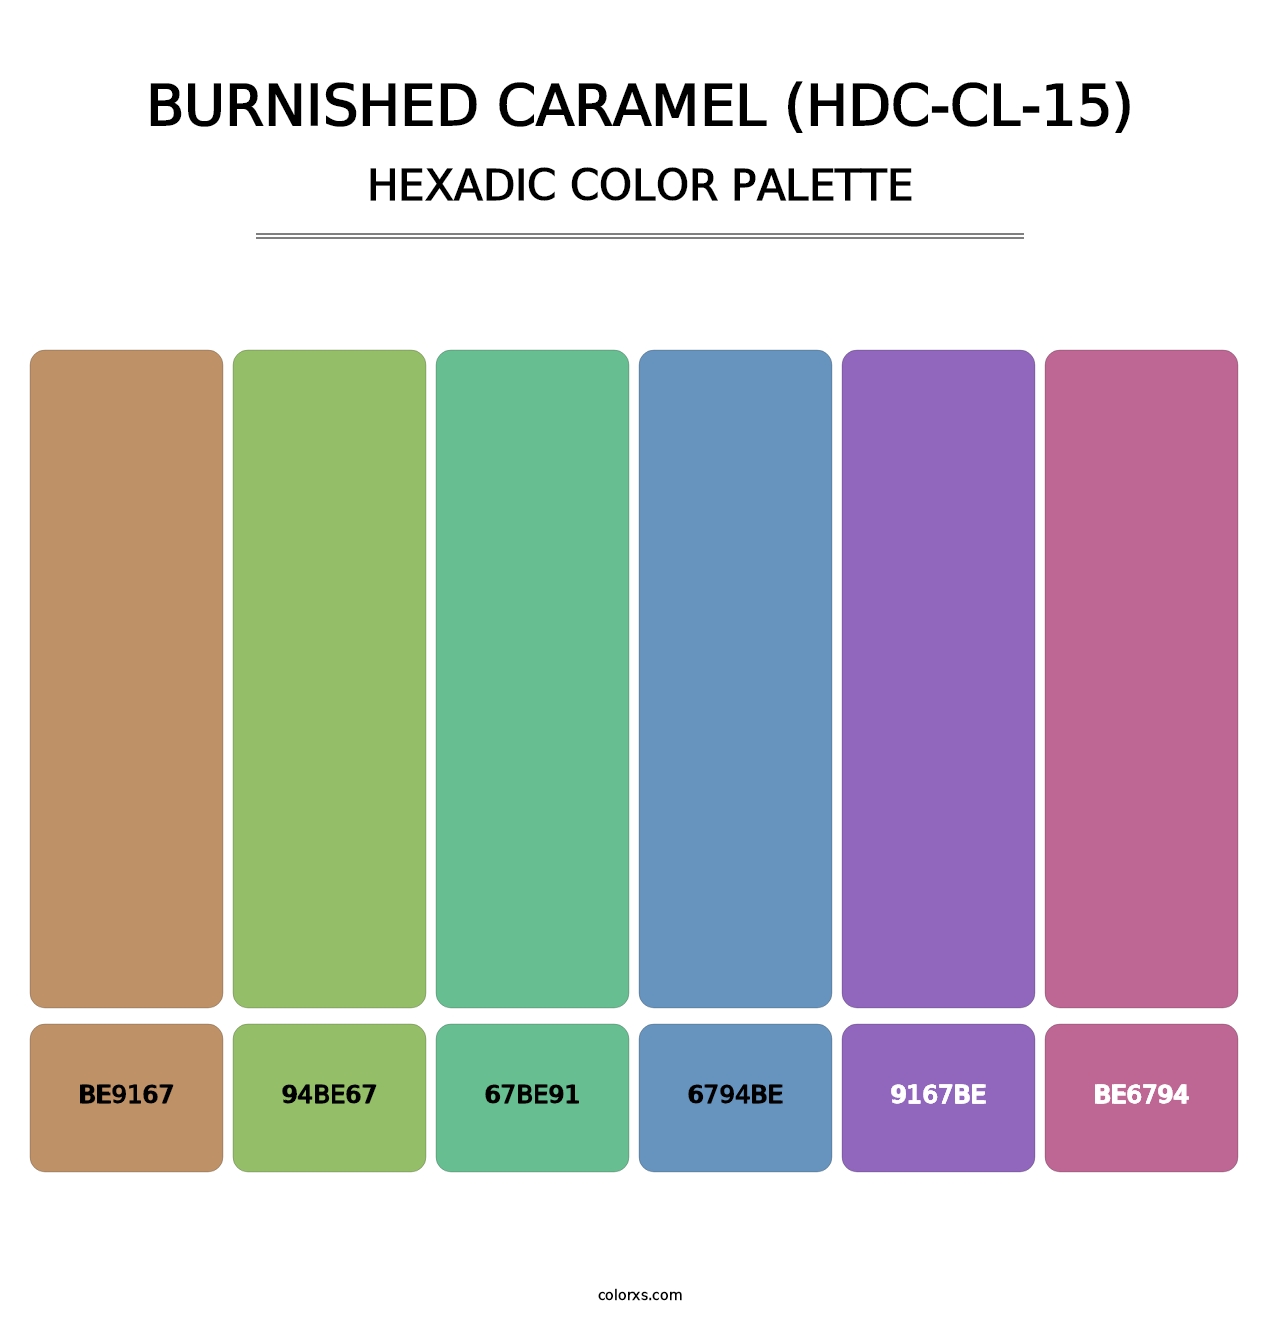 Burnished Caramel (HDC-CL-15) - Hexadic Color Palette